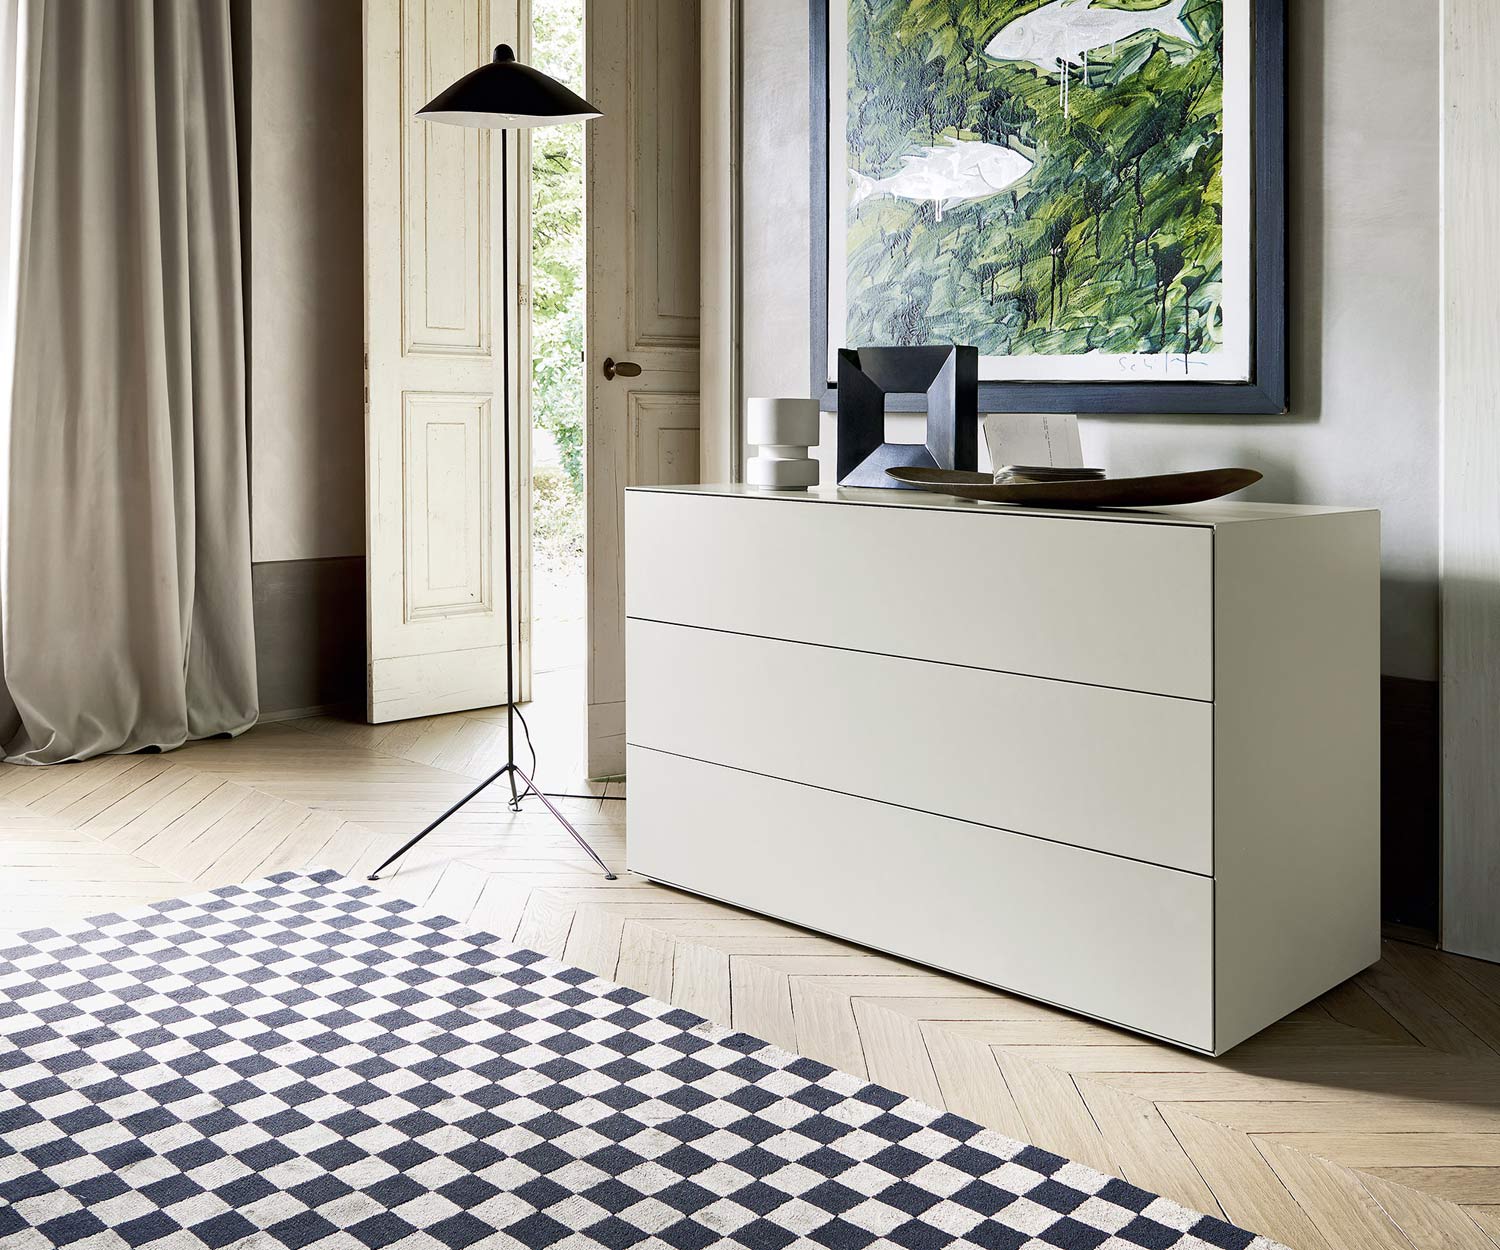 Exclusif Livitalia Commode design Ecletto blanc mat